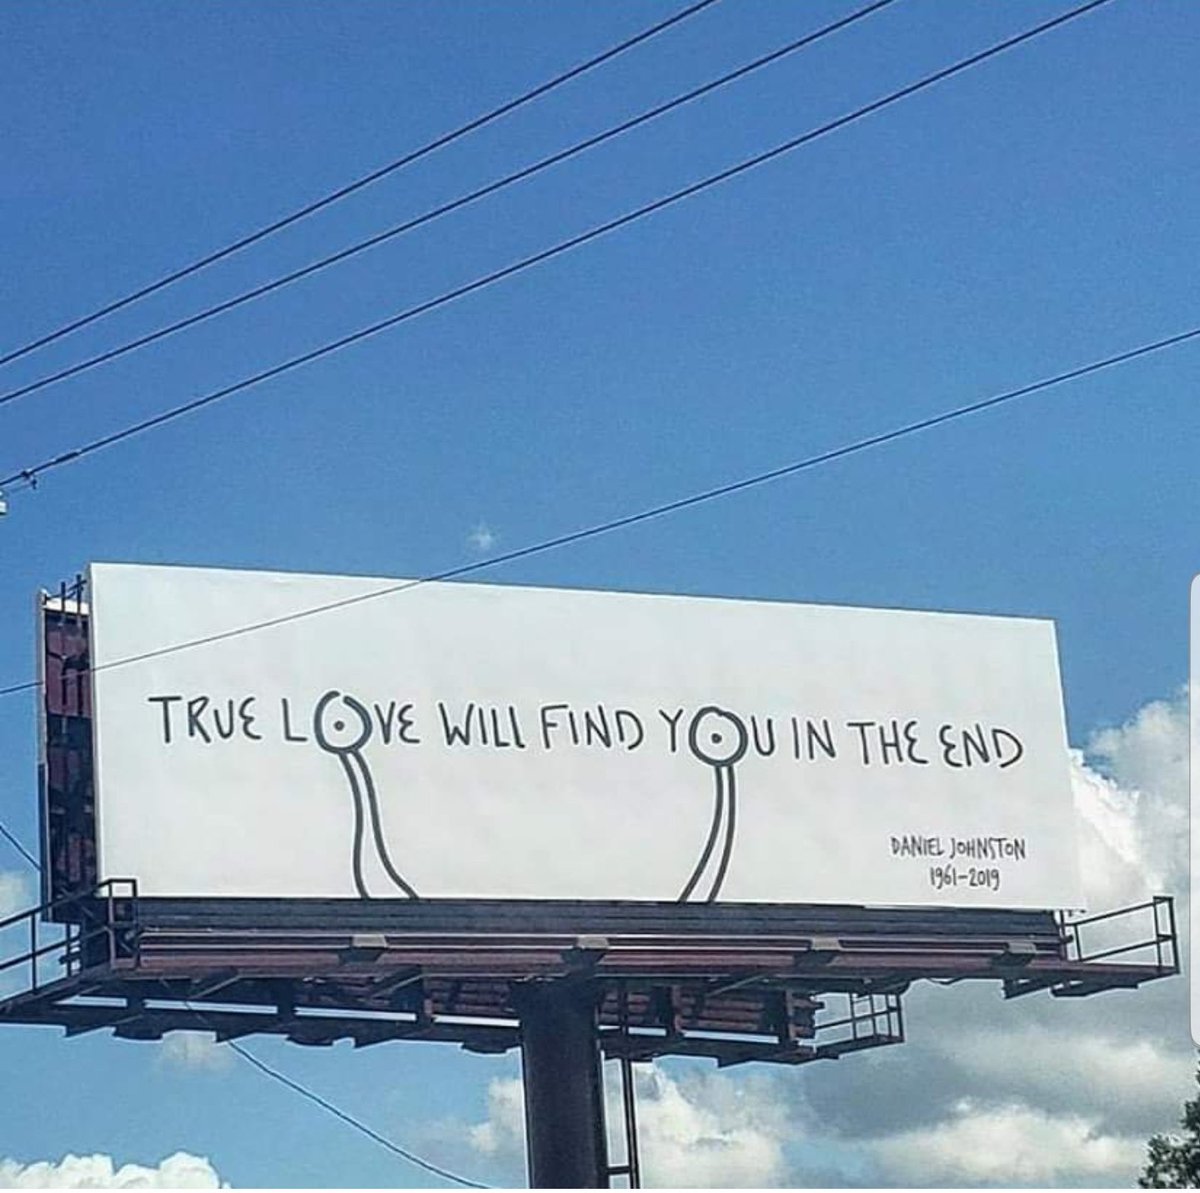 keepaustinwierd on X: True love will find you in the end https